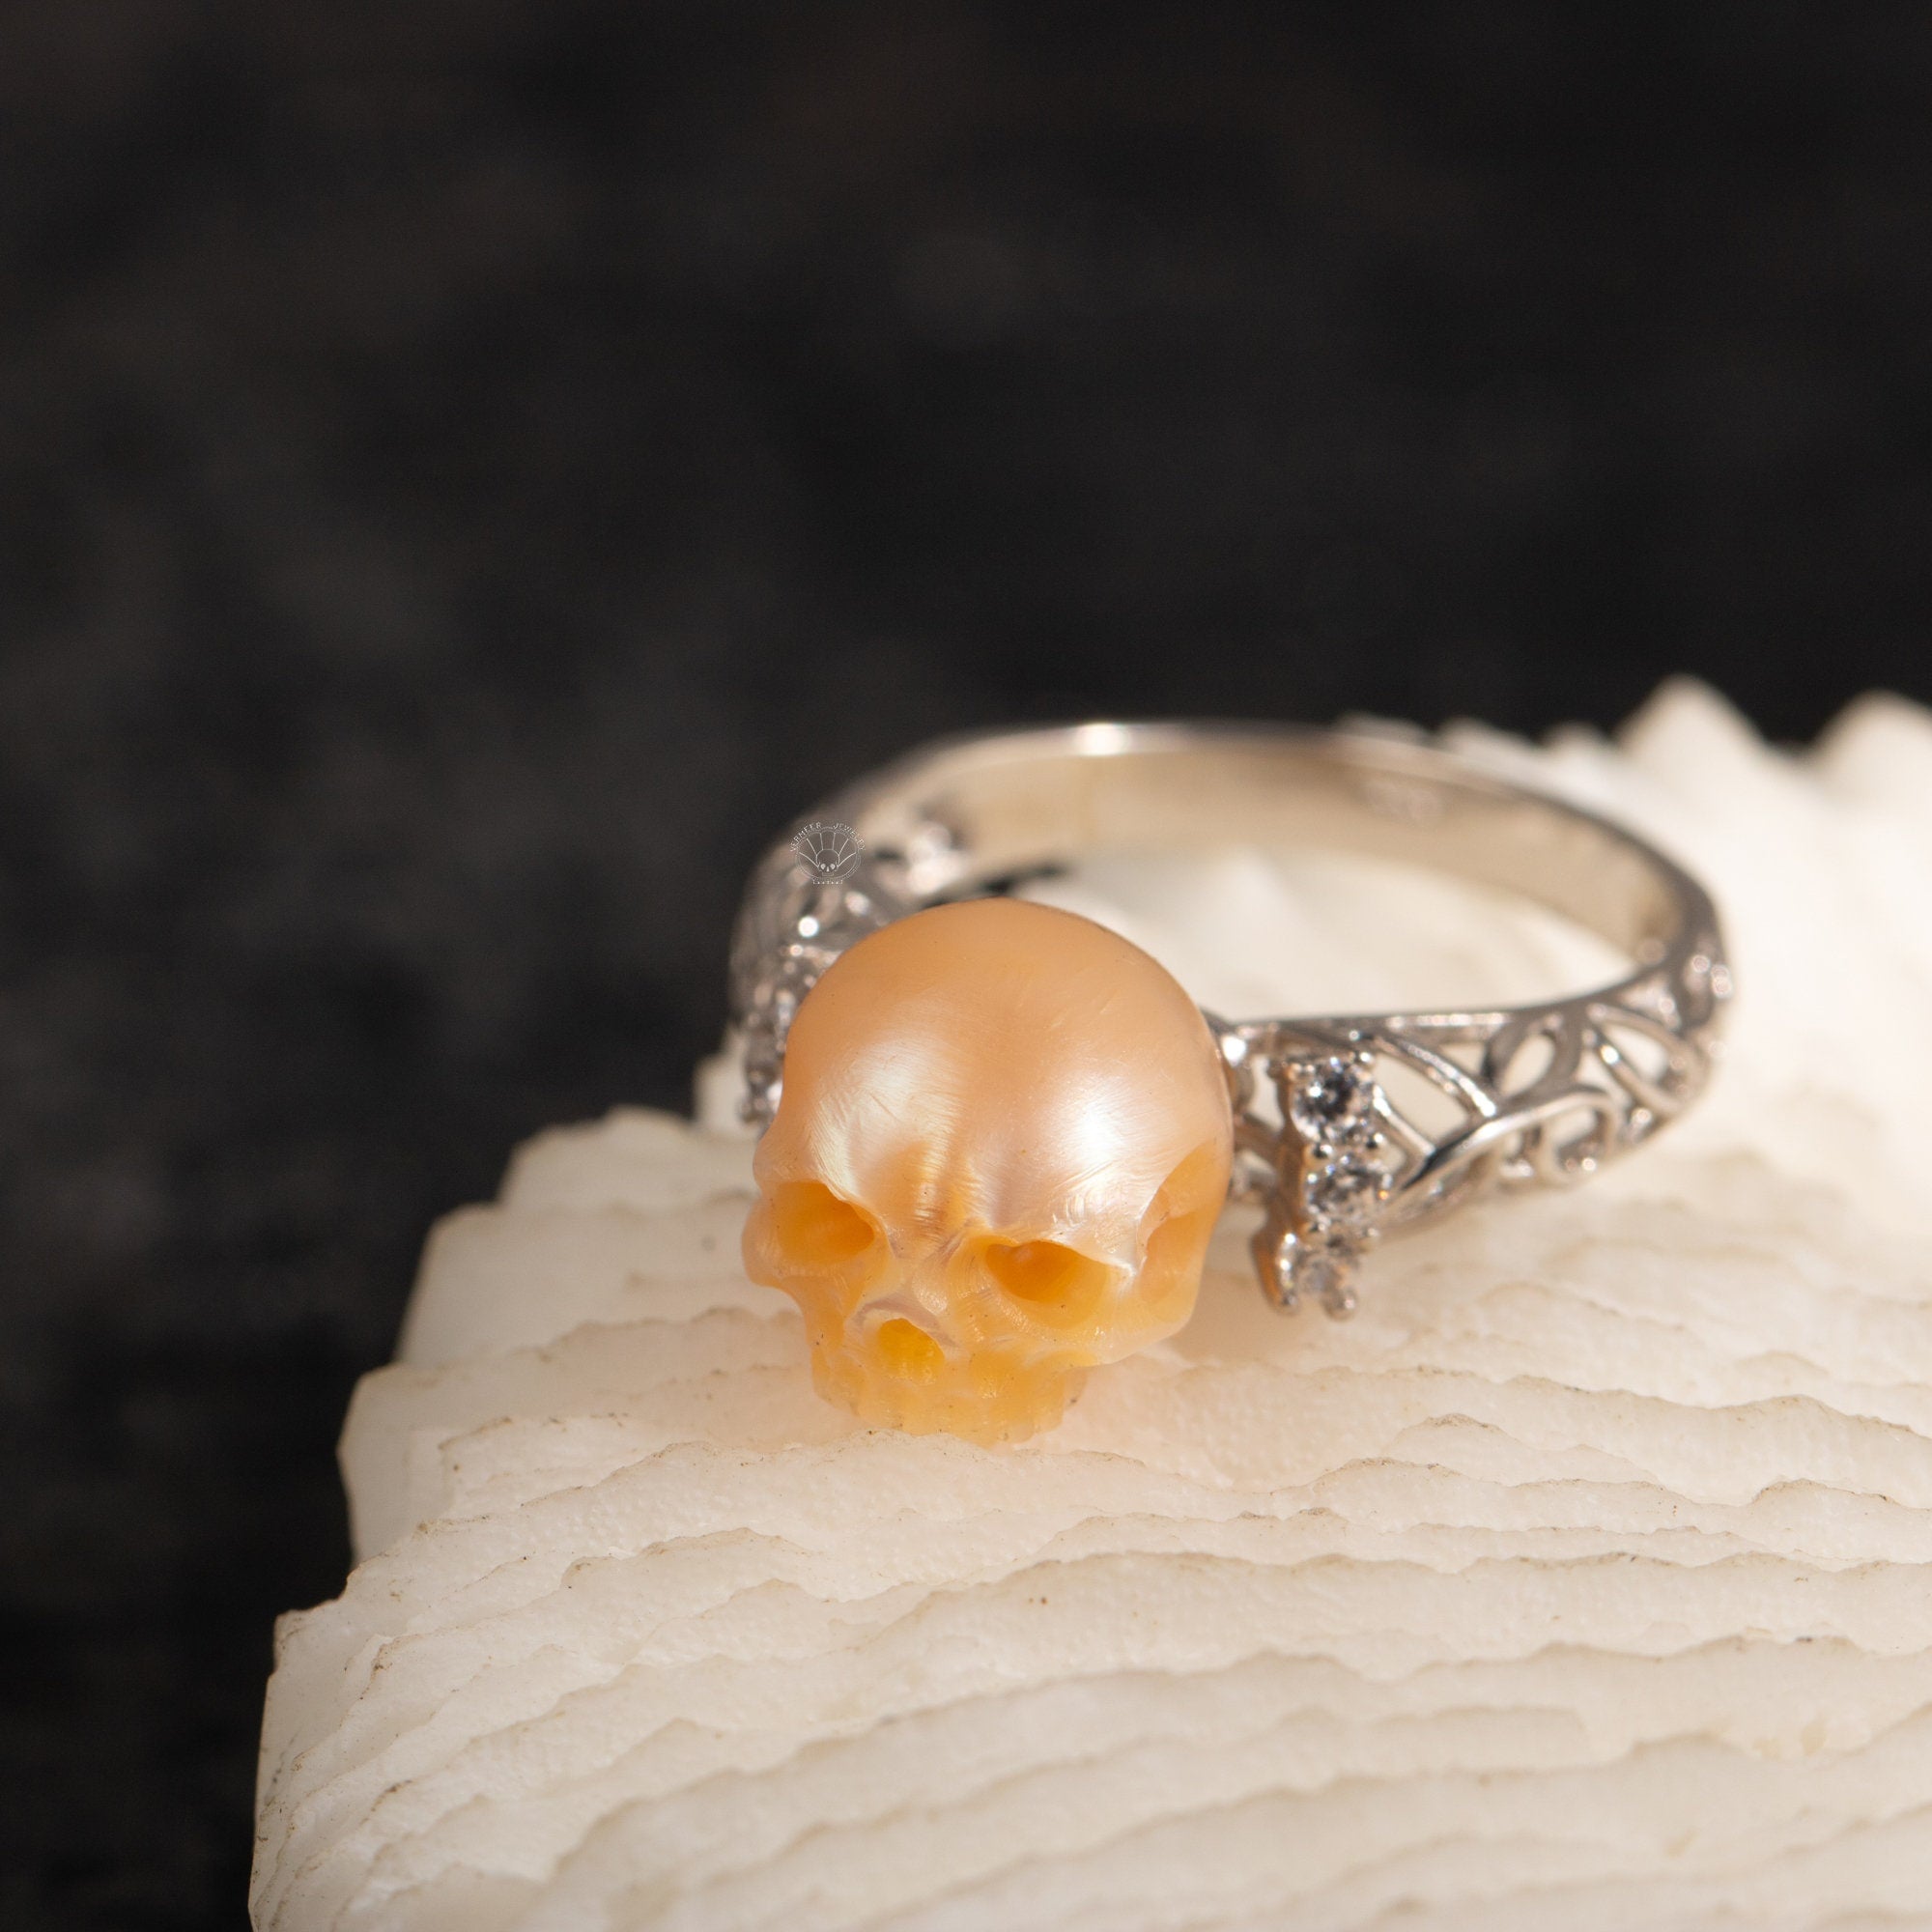 Secret Garden Ring handmade 925 silver skull carved pearl ring